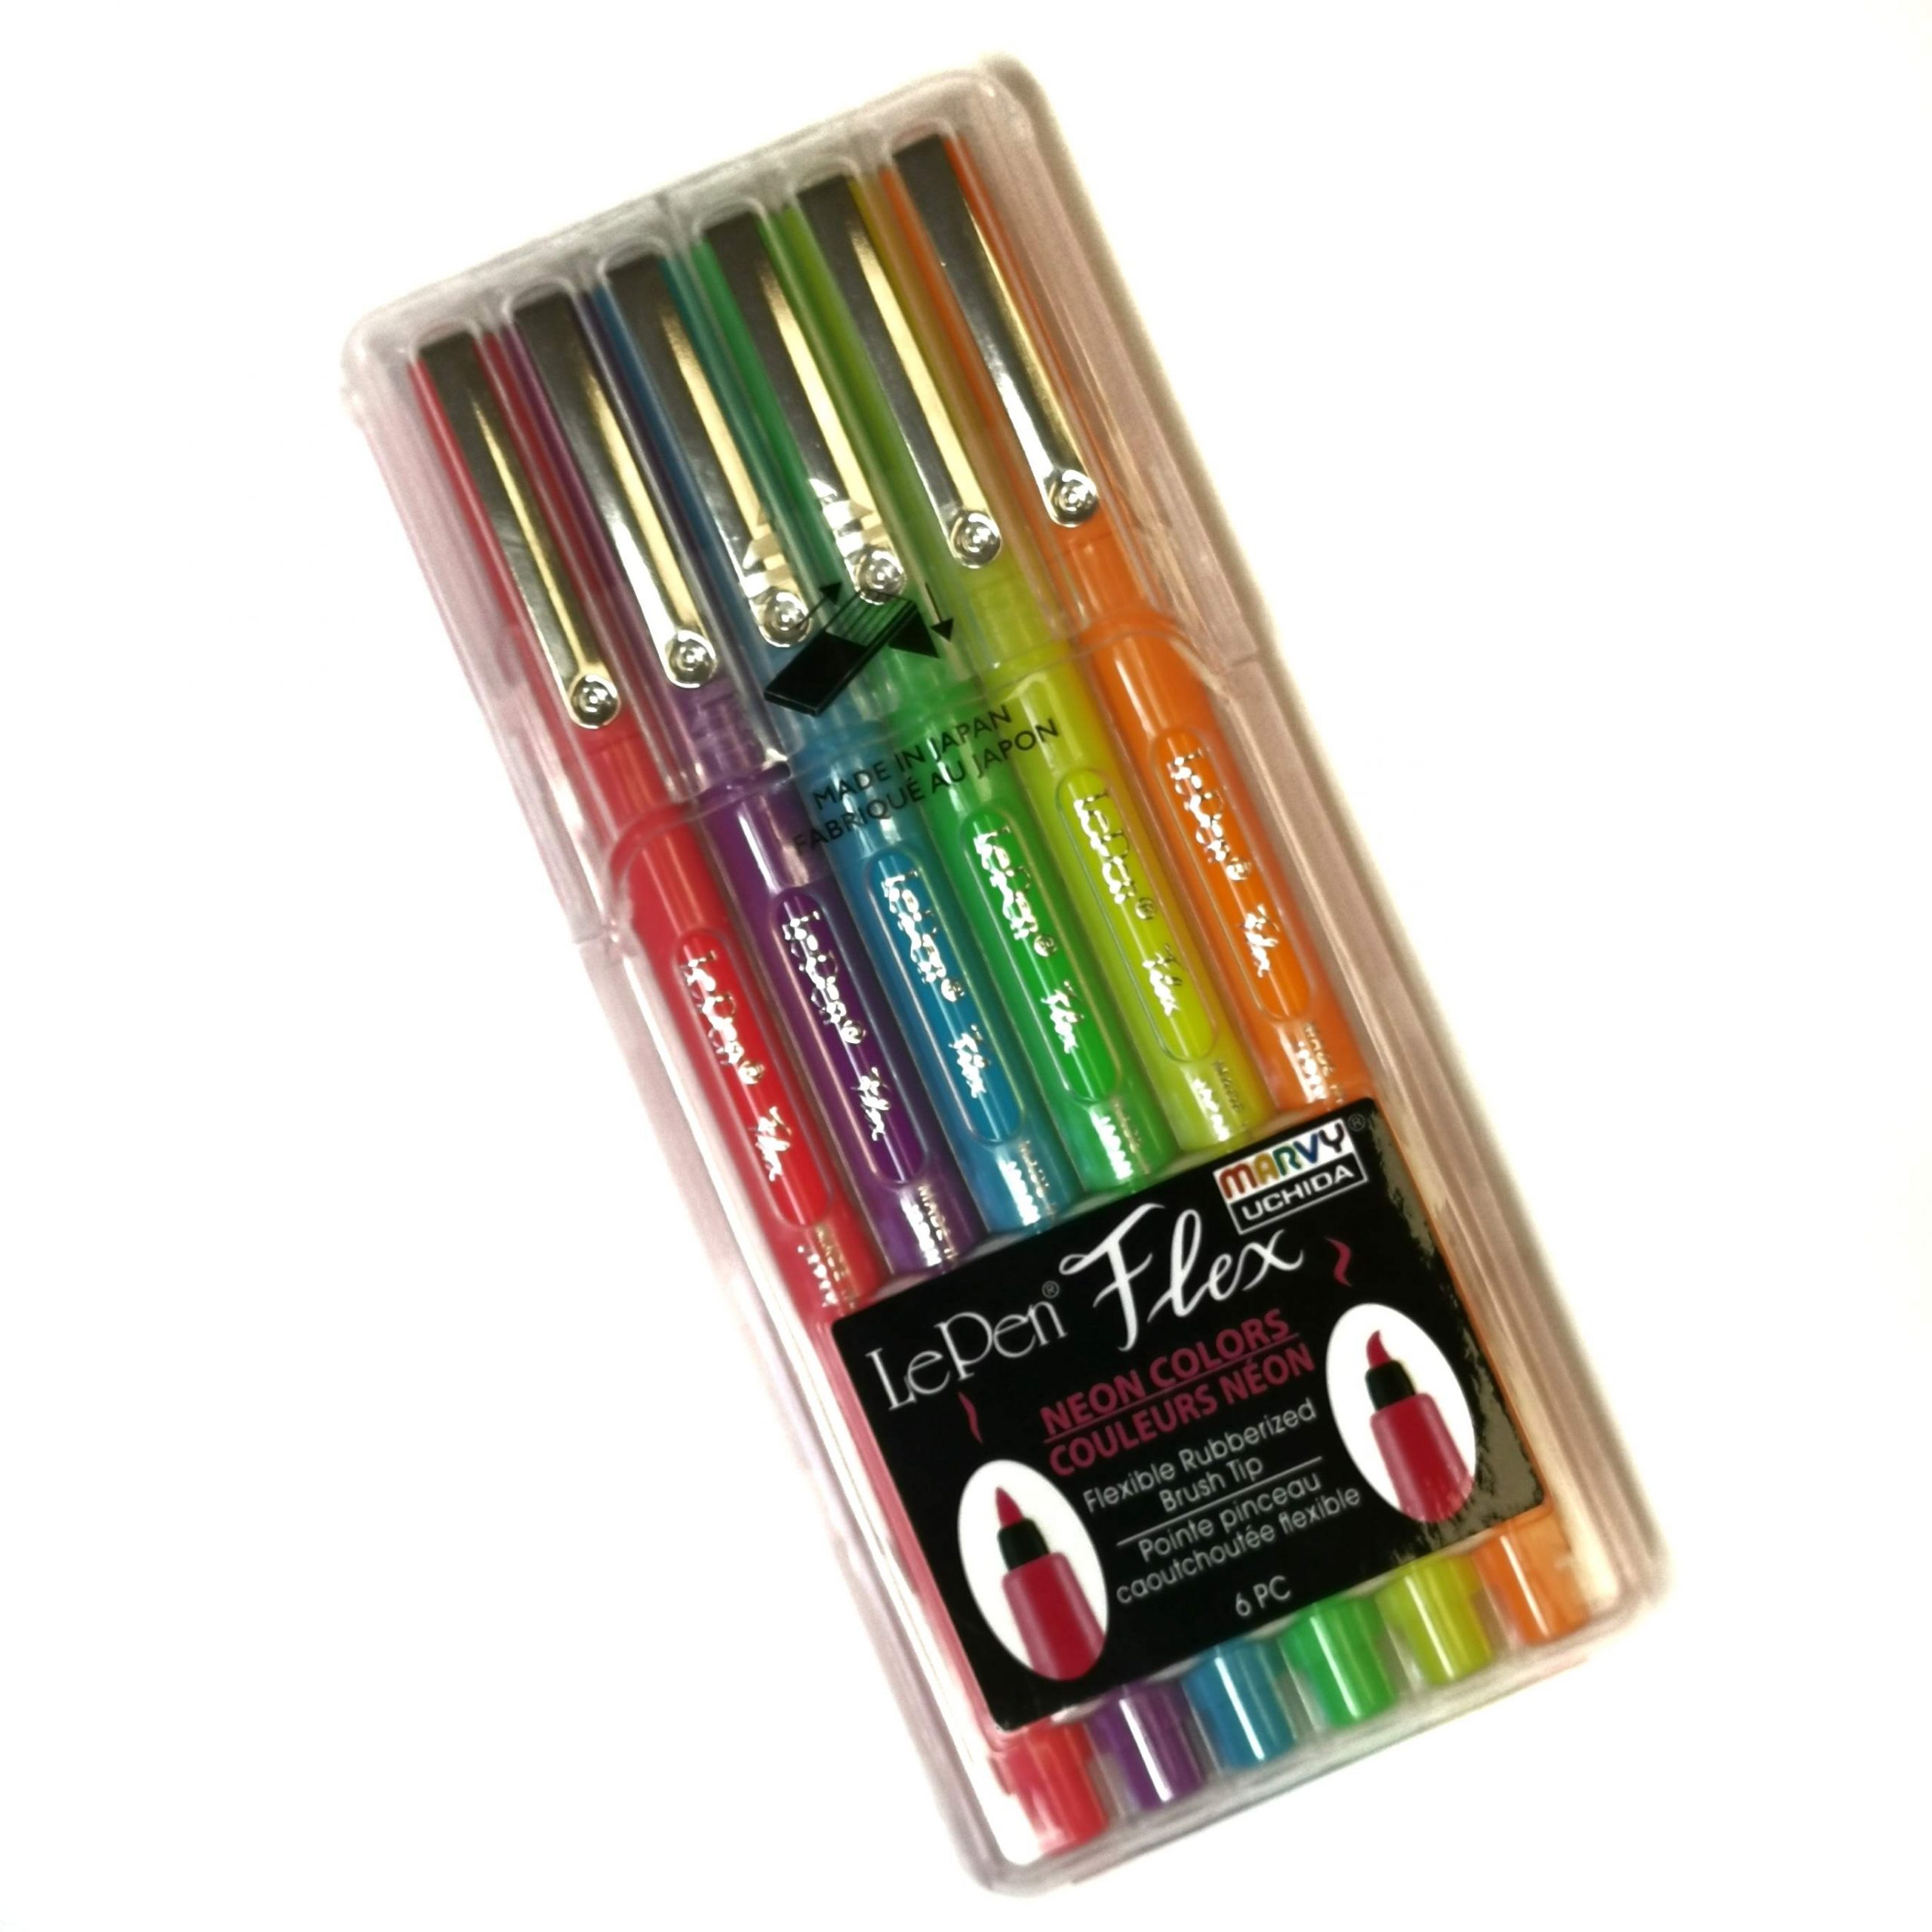 Marvy Le Pen Set of 6- Neon Colors (4300-6F)